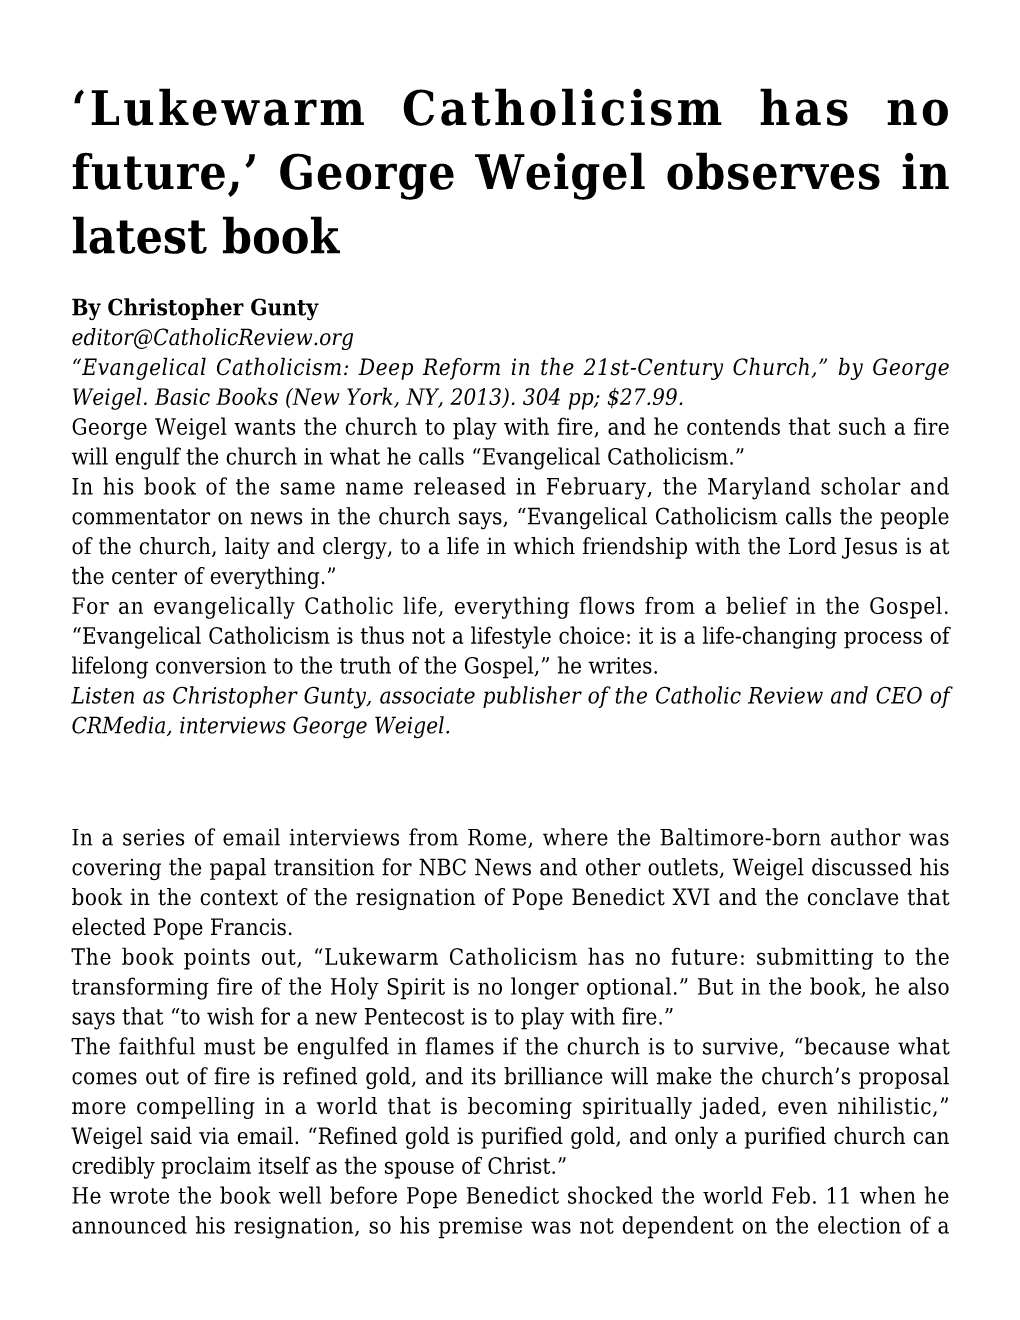 &#8216;Lukewarm Catholicism Has No Future,&#8217; George Weigel